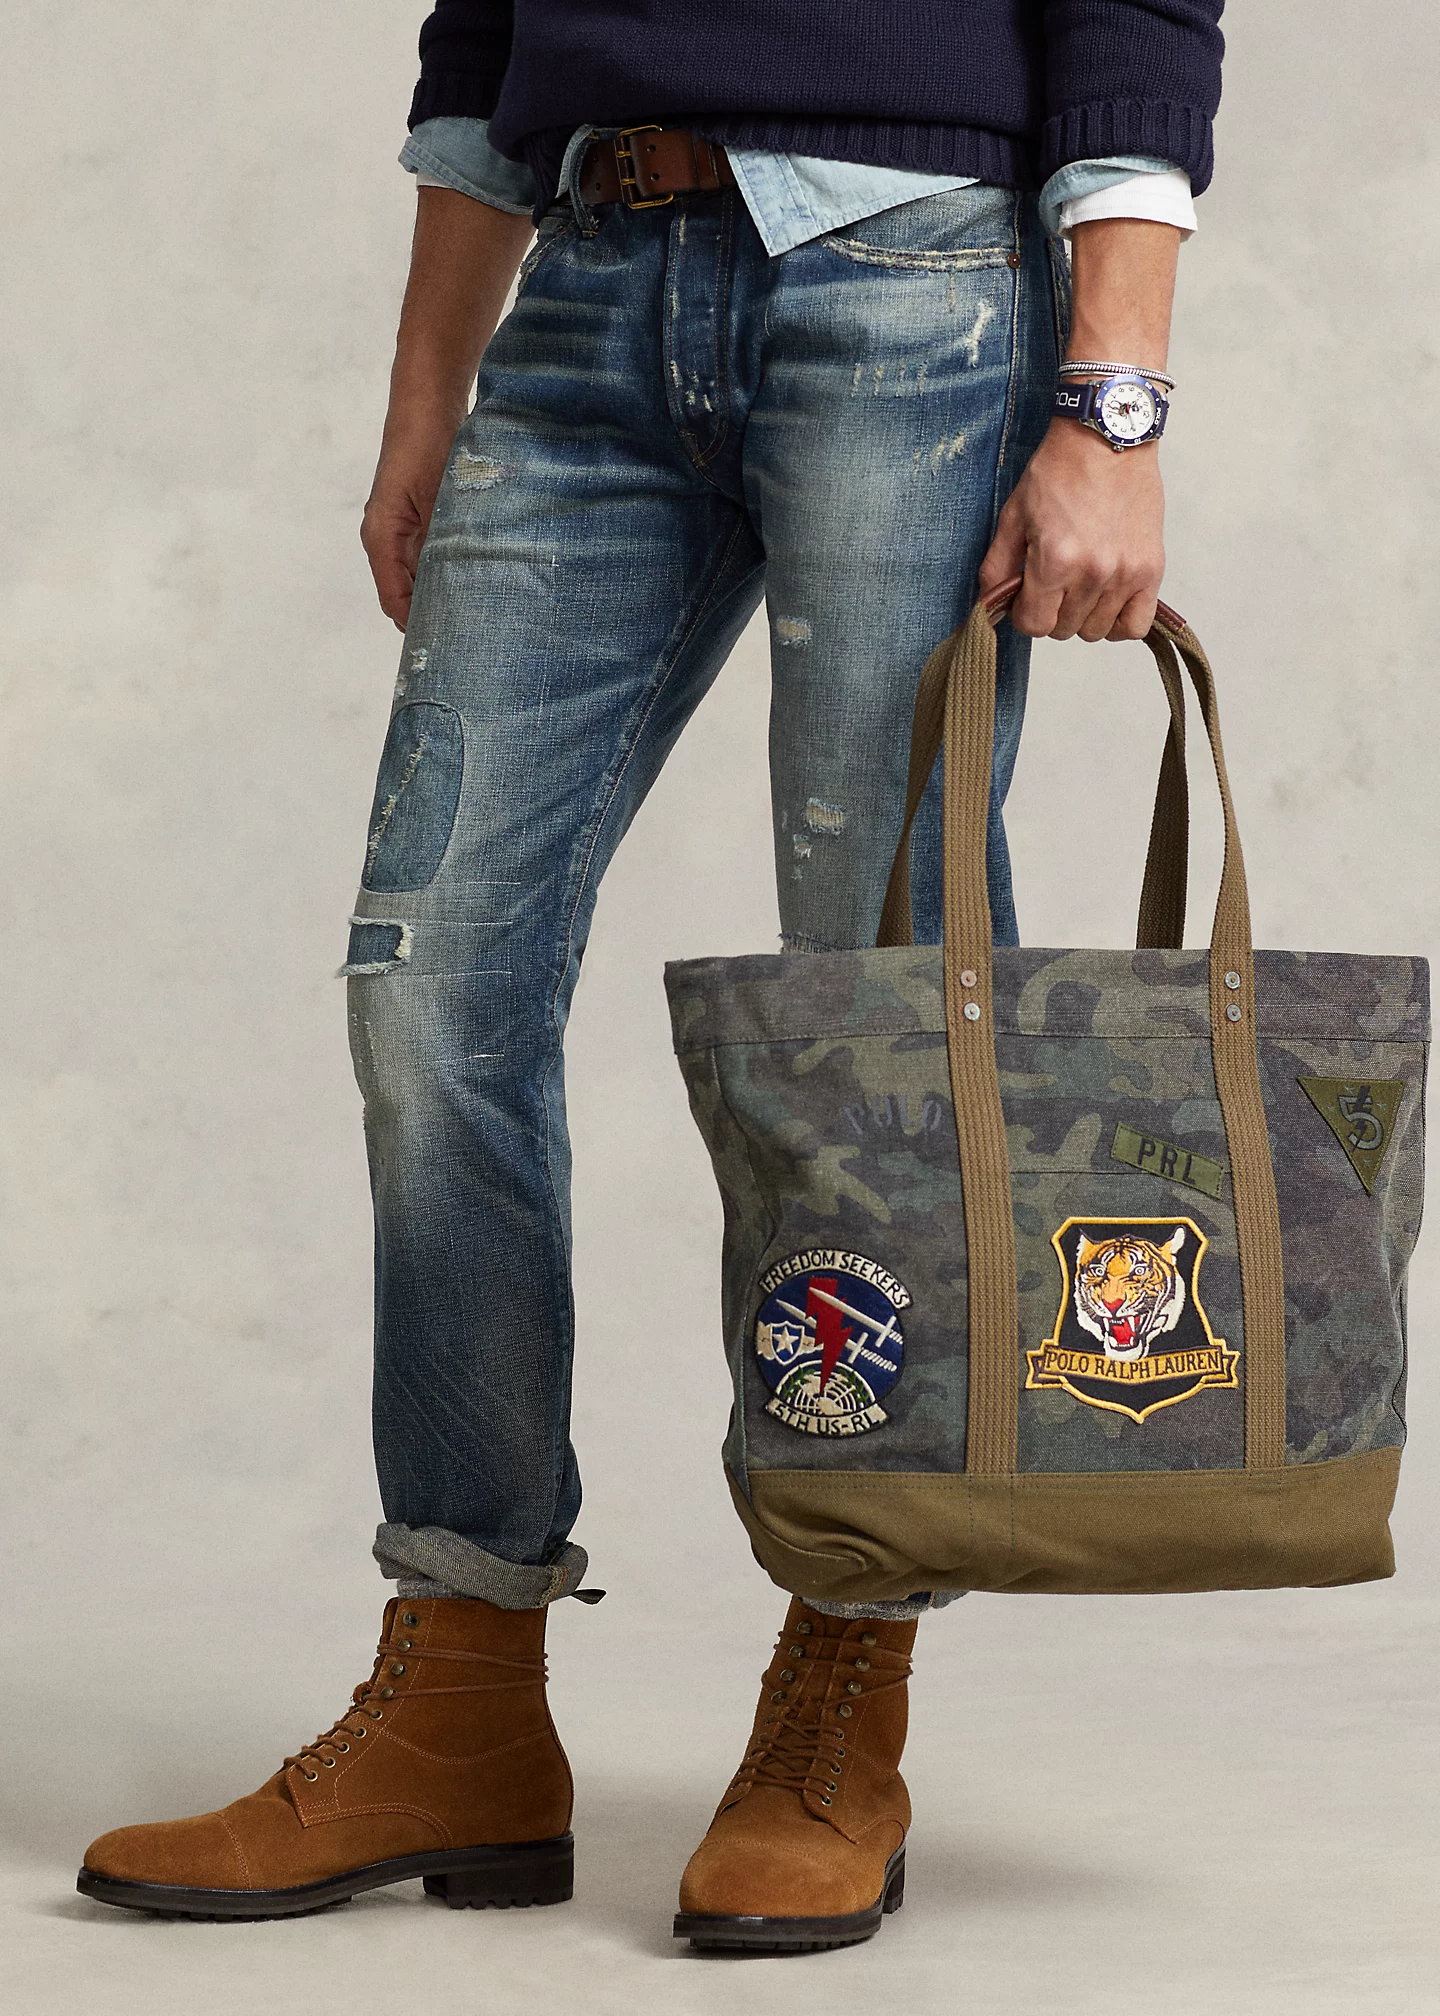 stylish handbagsCanvas Camo Tote-,$18.69-4